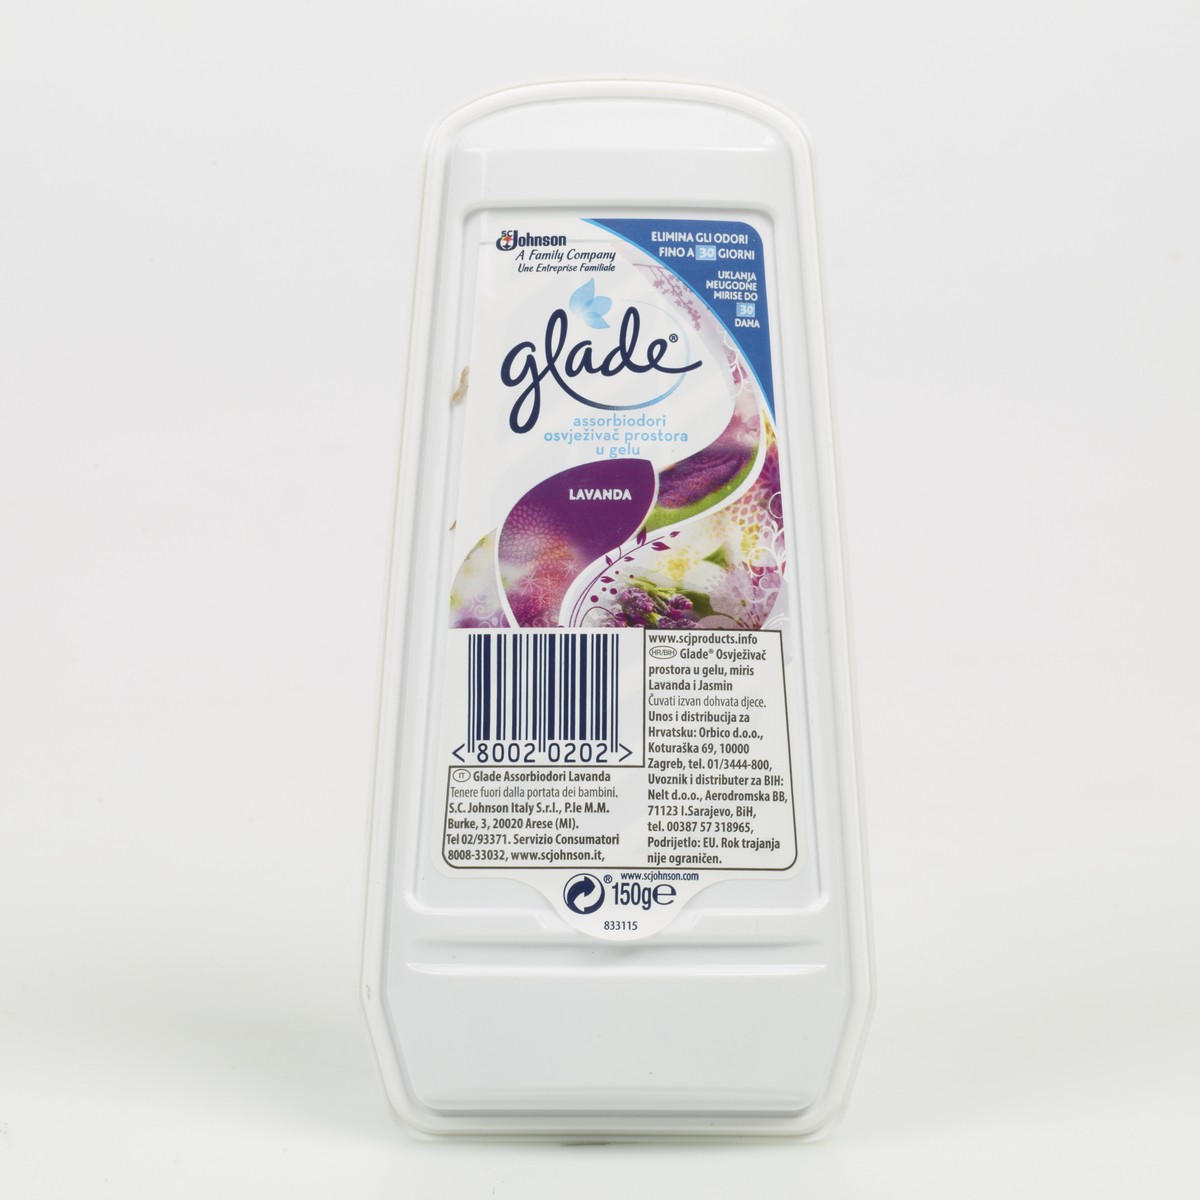 Glade Deodorante assorbiodori